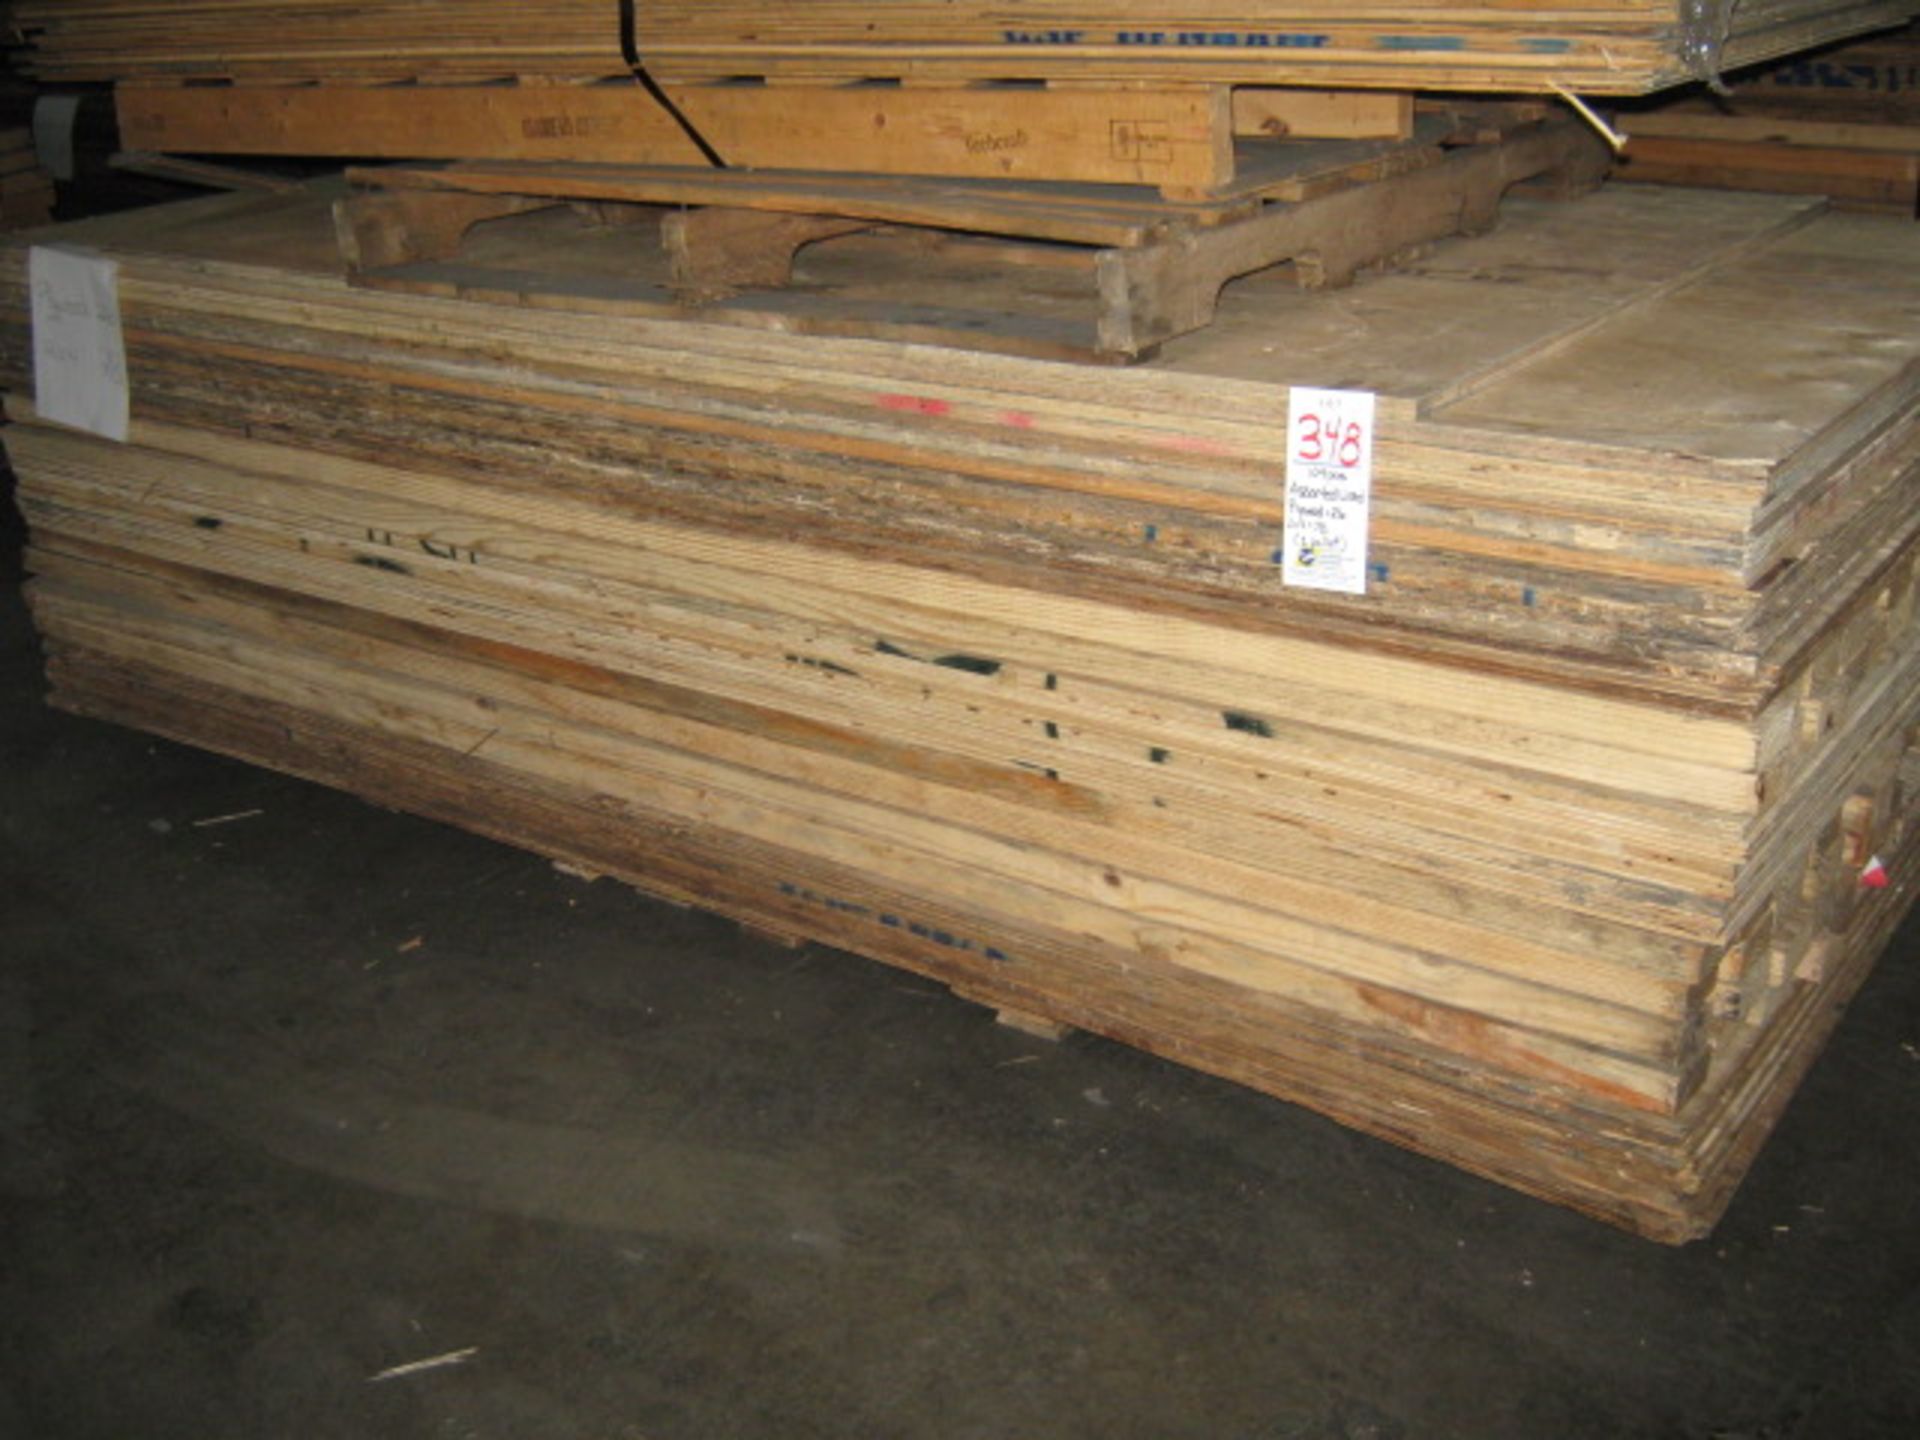 Assorted Wood,Plywood-26pcs,2x4-78pcs (1 Pallet) - Bild 2 aus 2